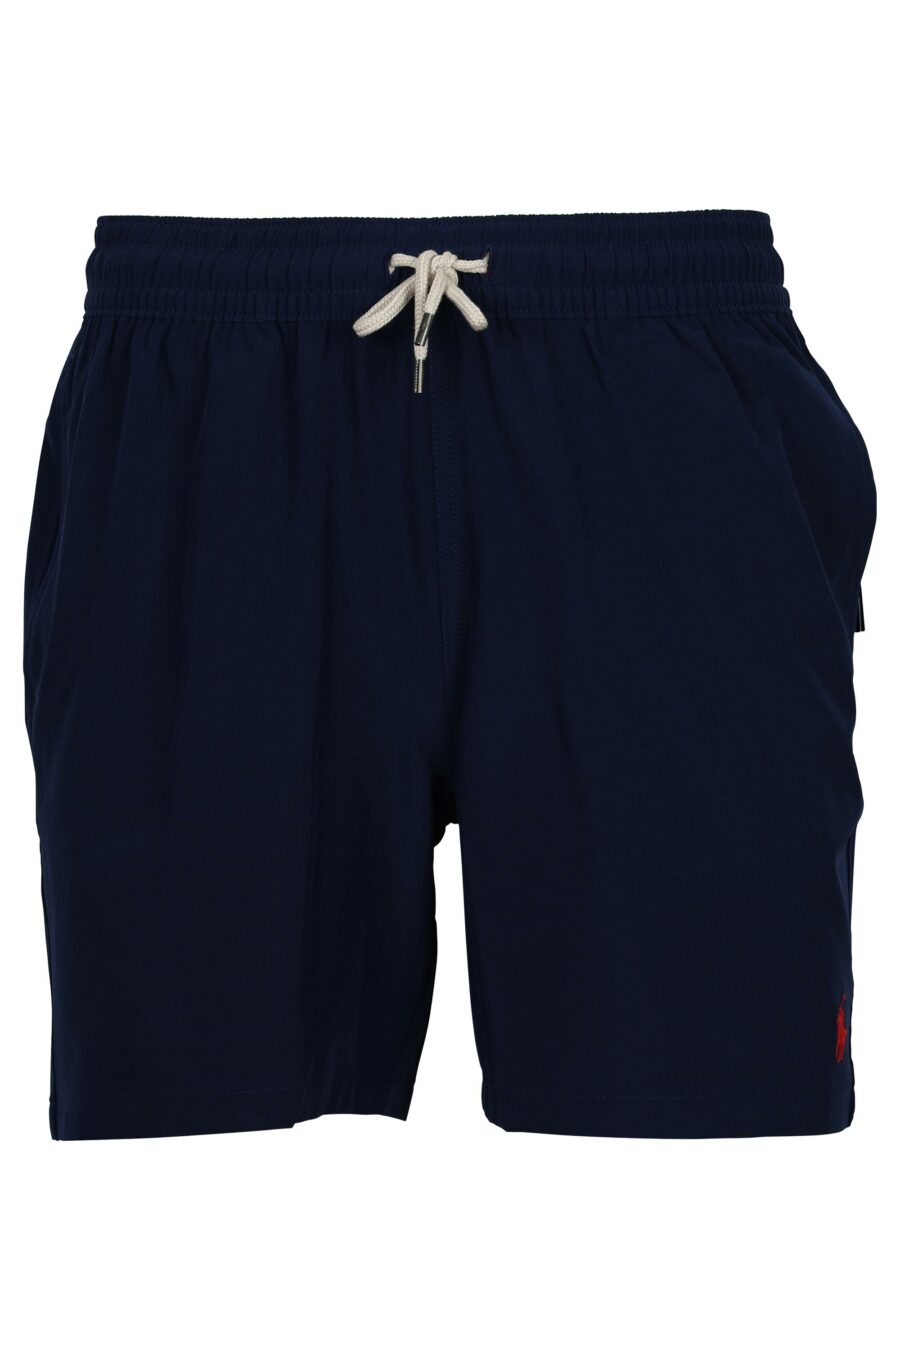 Dunkelblaue "Polo"-Shorts mit Minilogo - 3616851078616